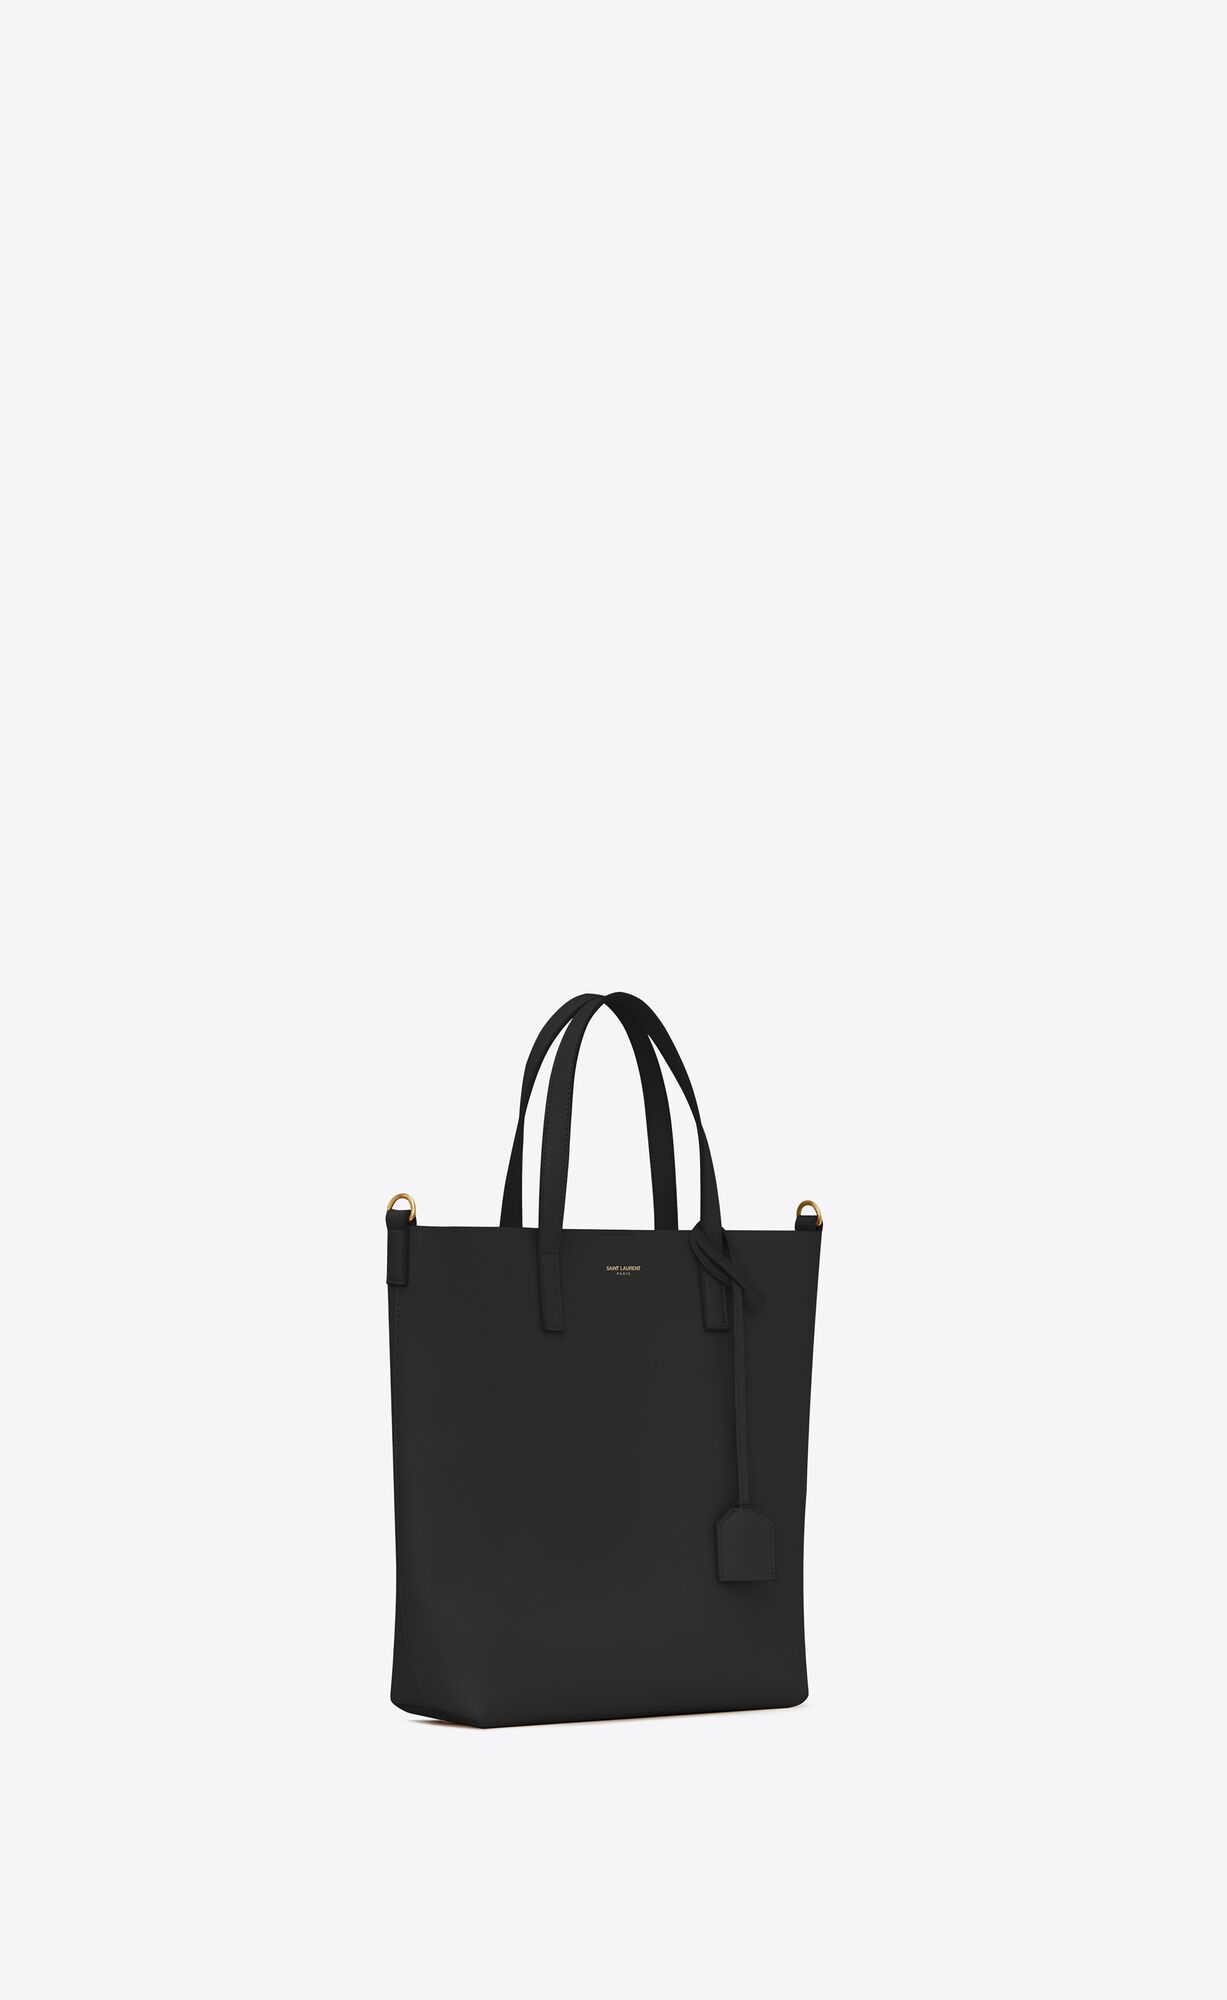 Shopping bag saint laurent Toy in supple leather | Saint Laurent ...